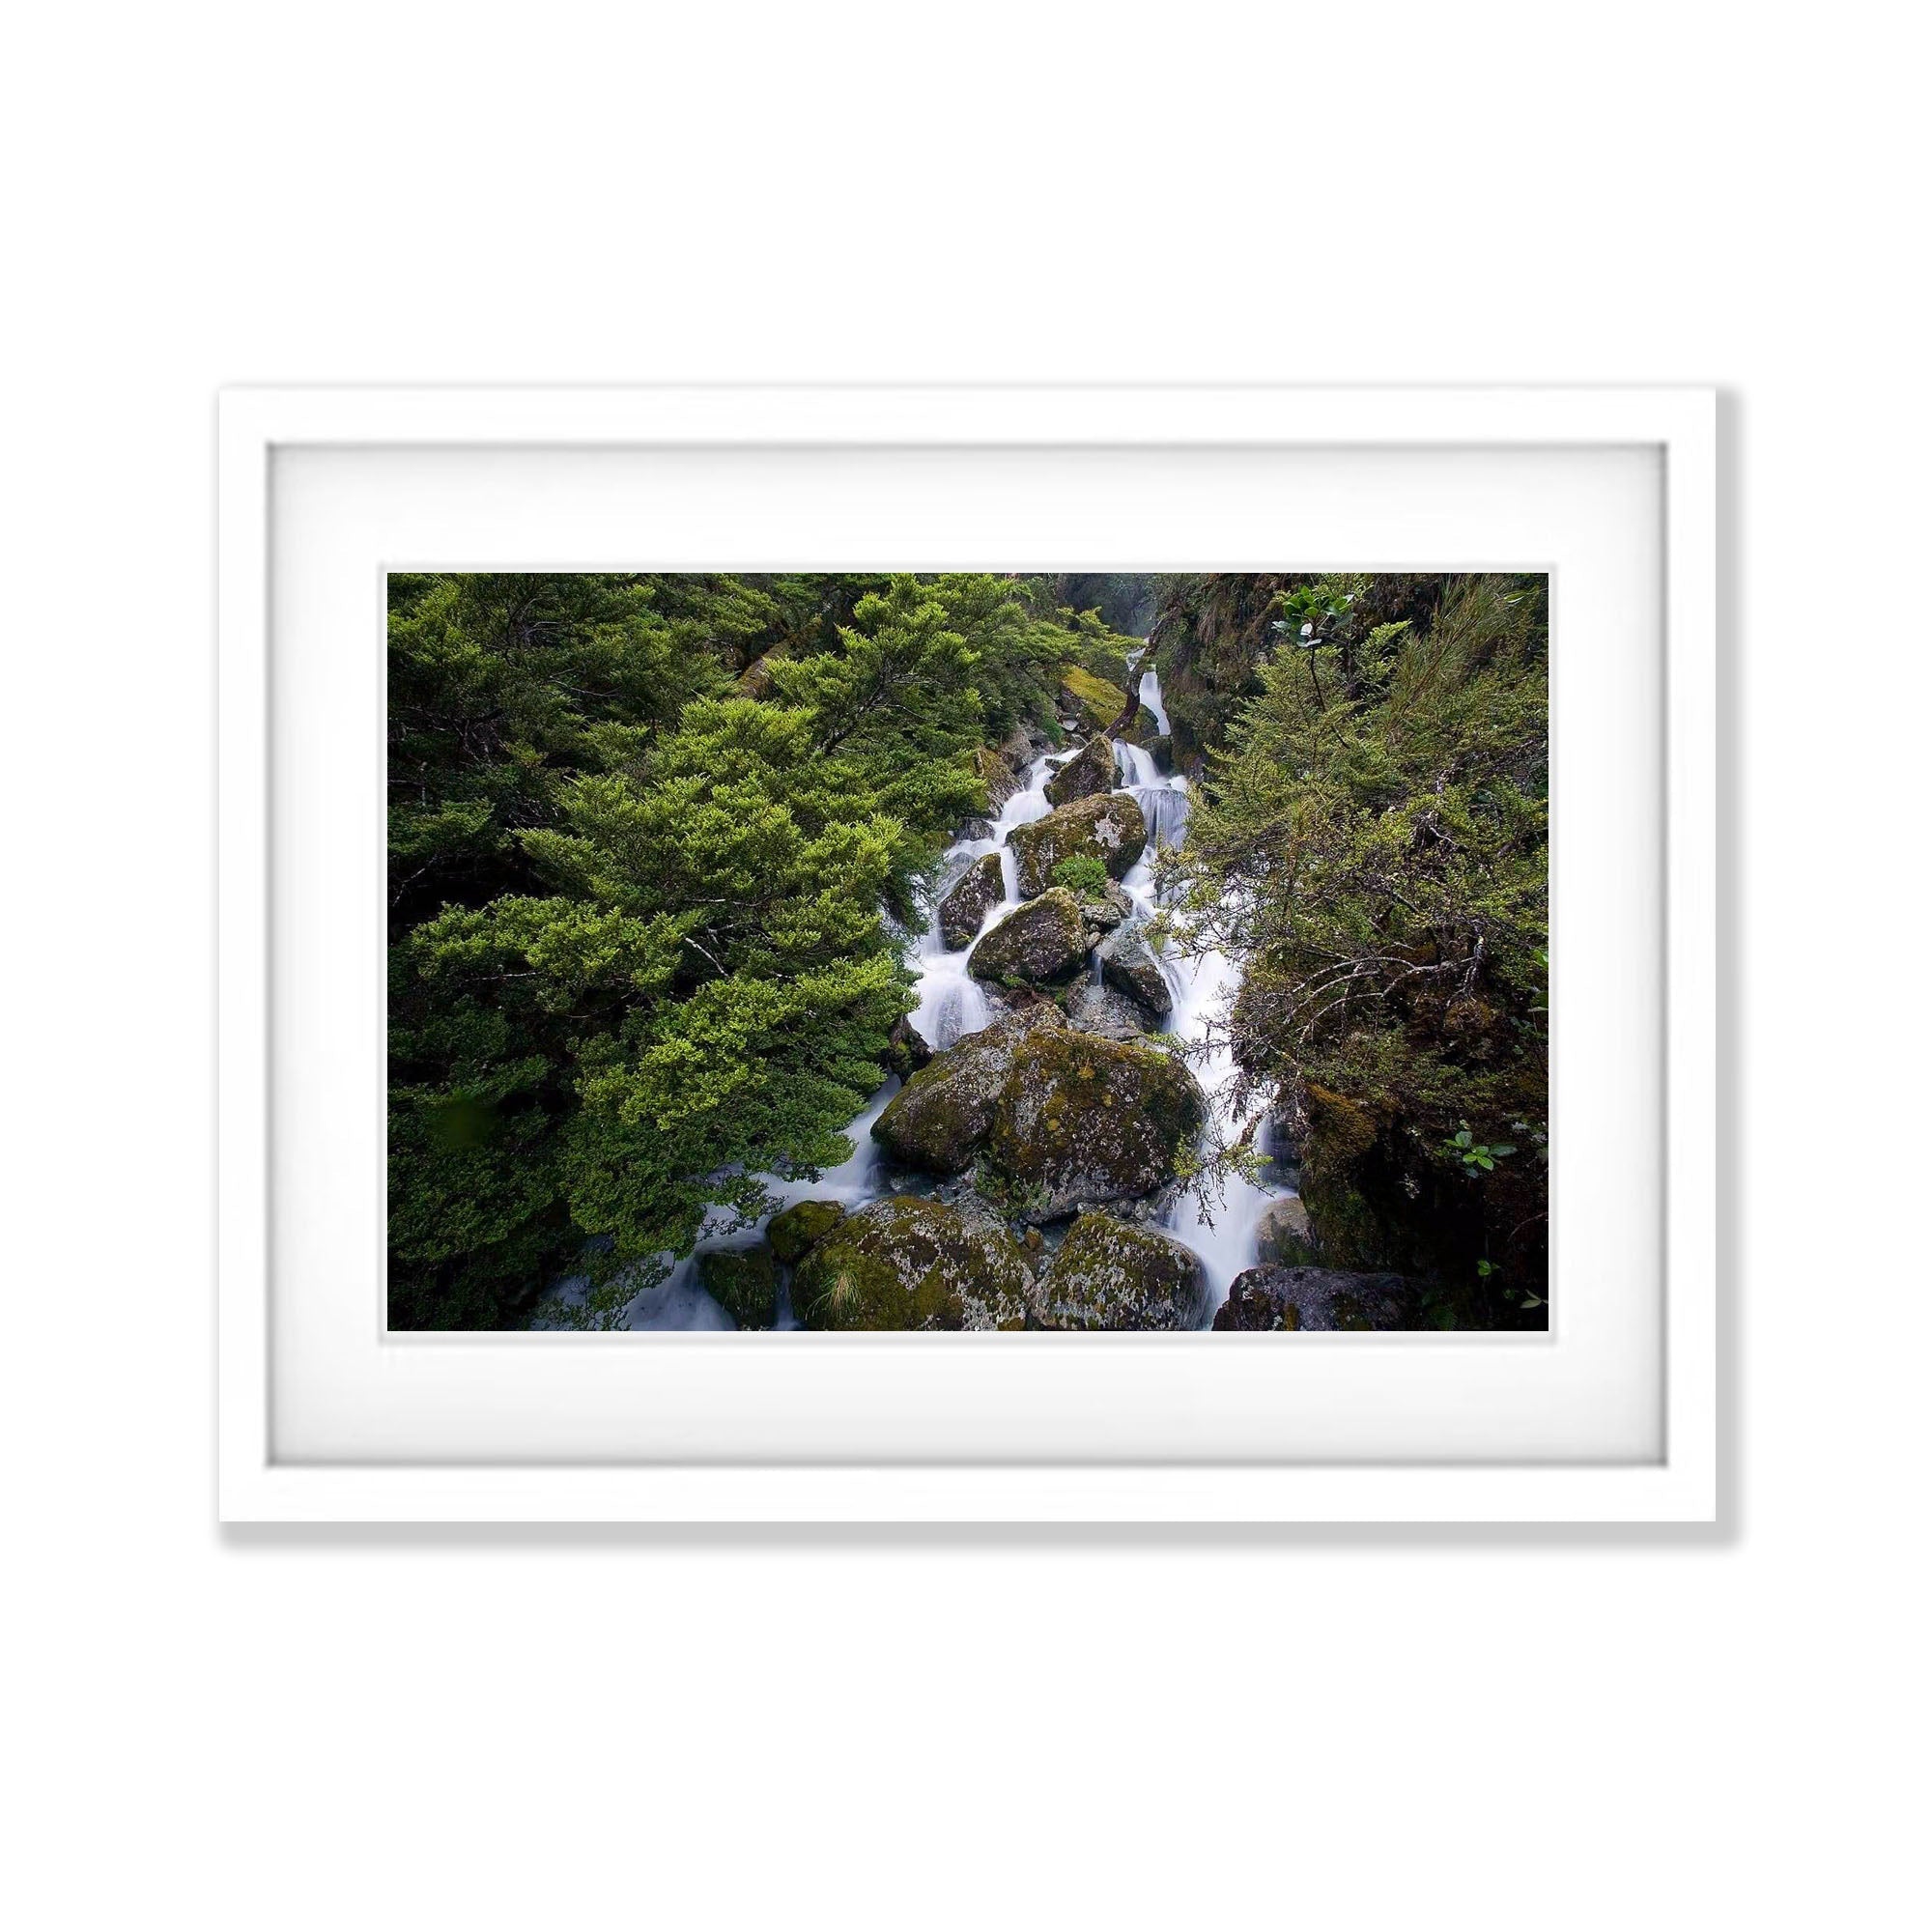 Waterfall 4, Milford Track - New Zealand